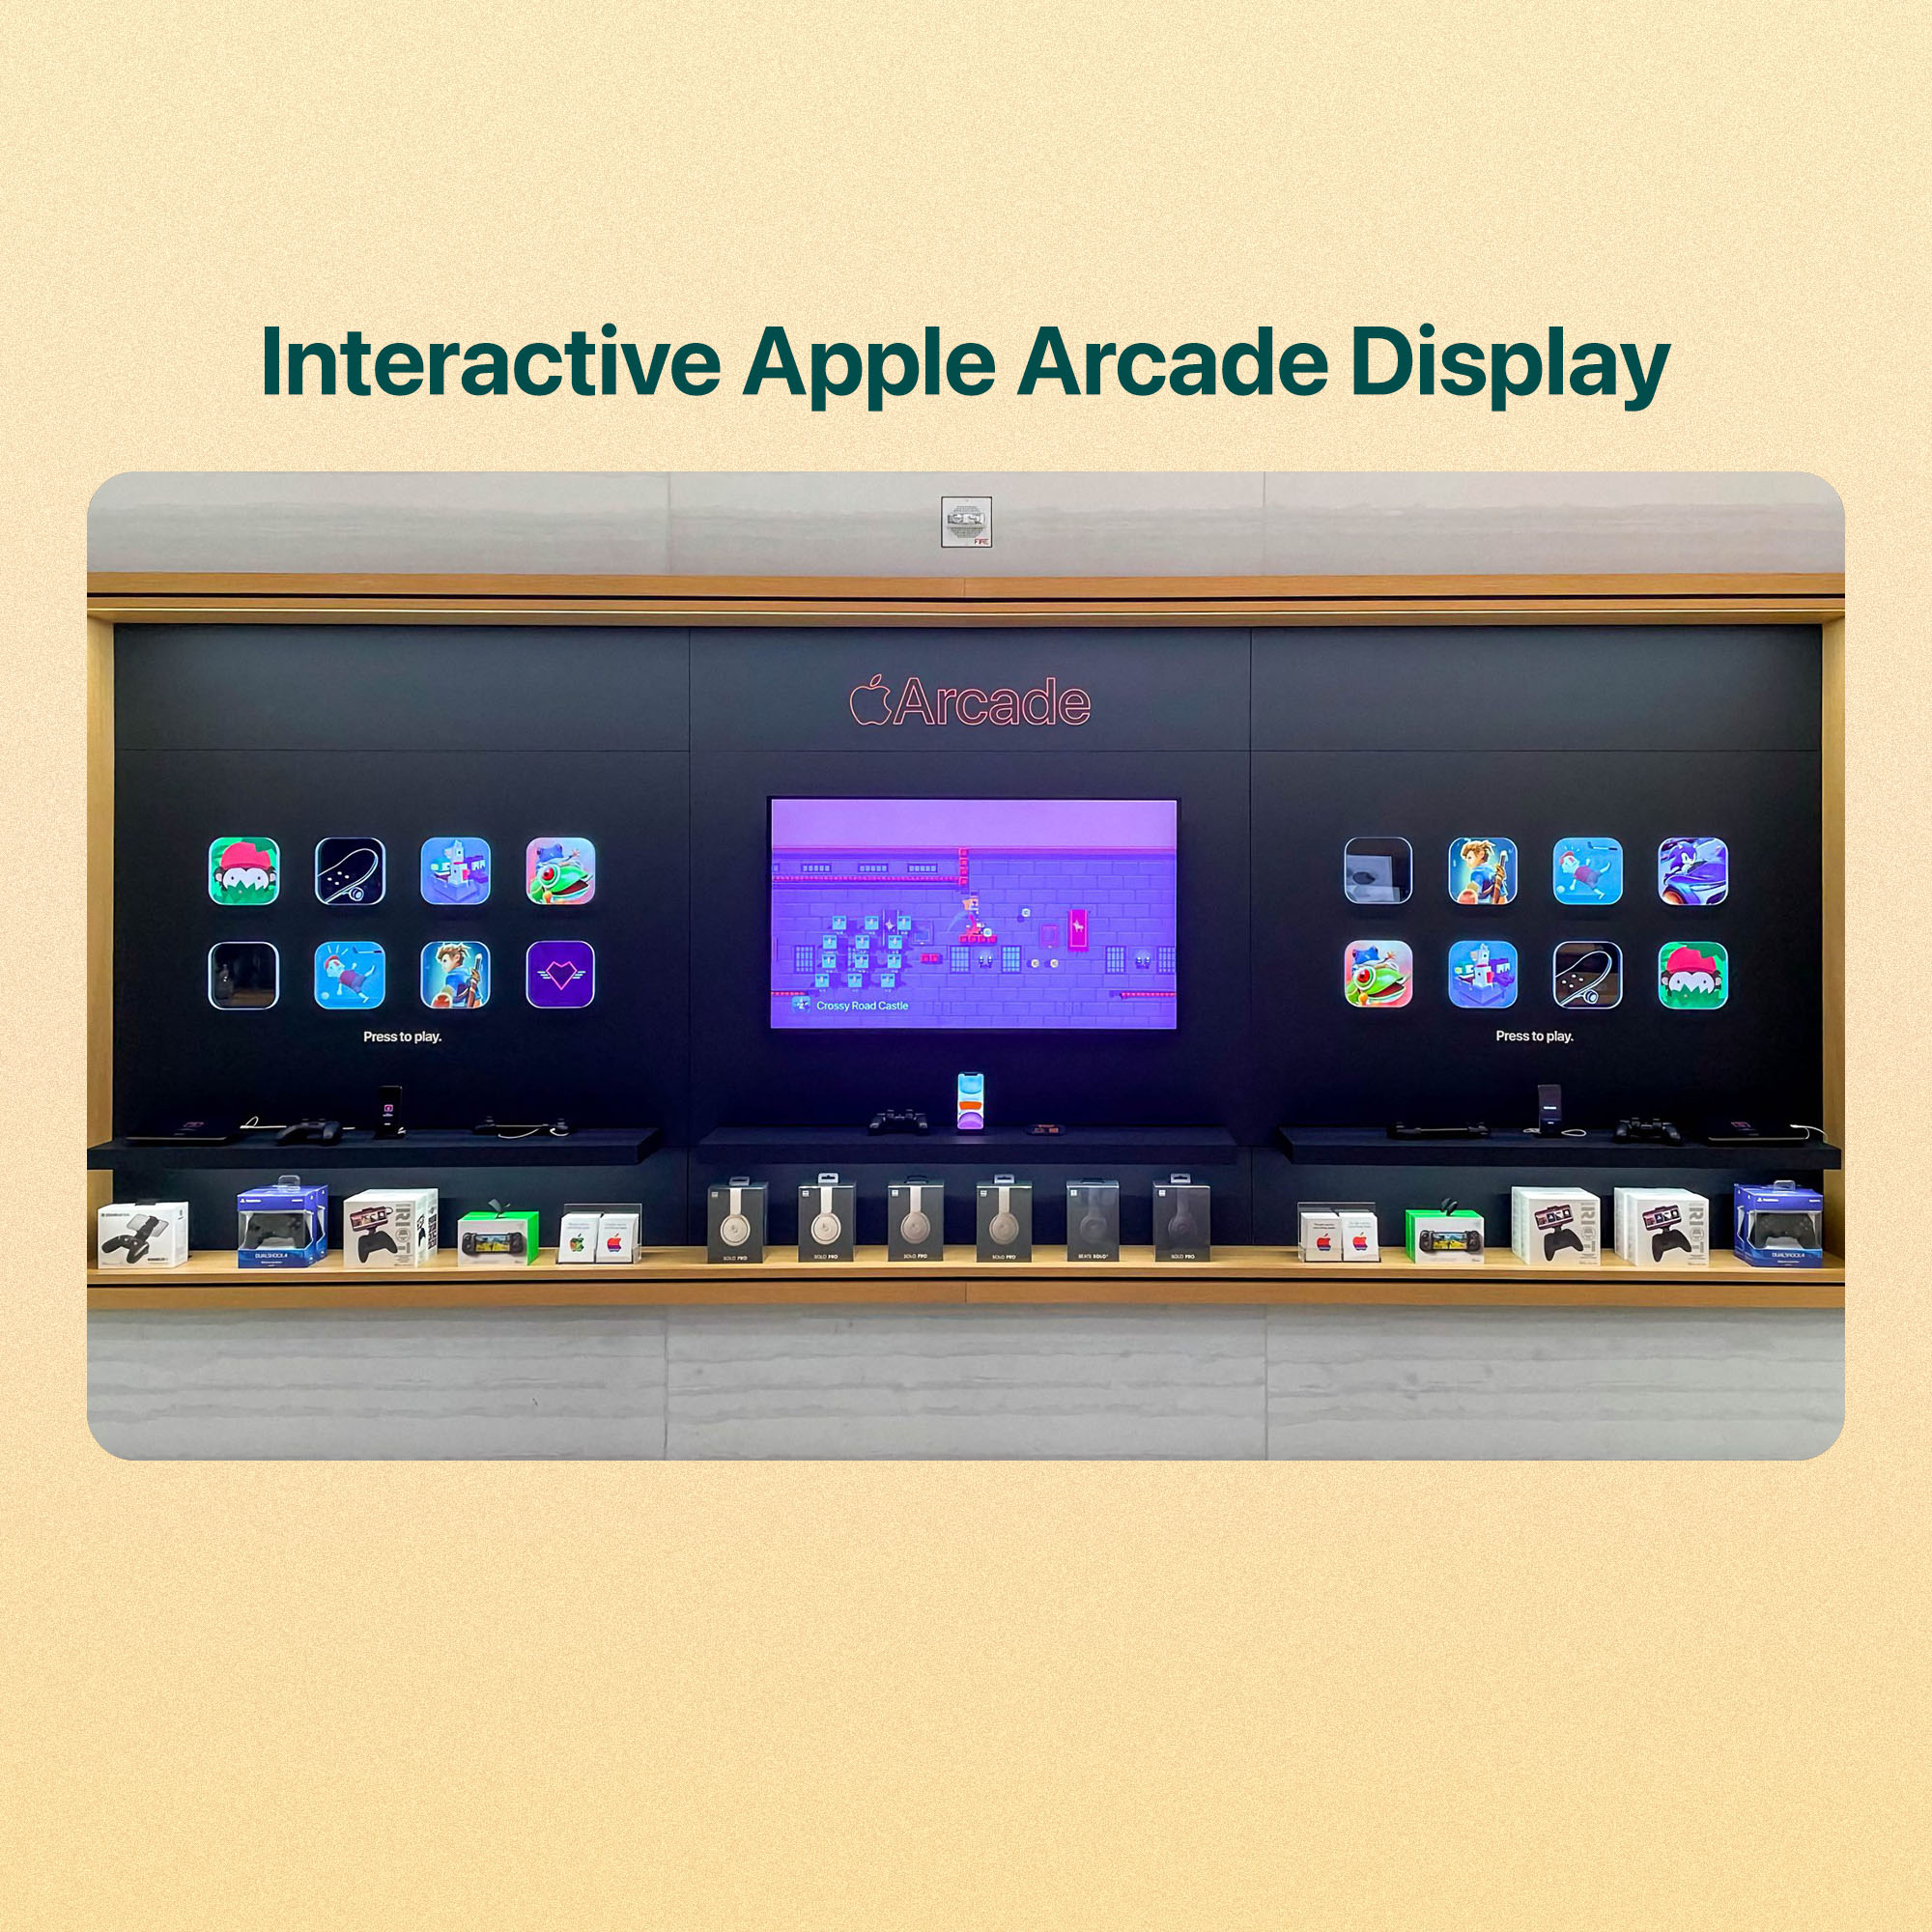 Interactive Apple Arcade Display